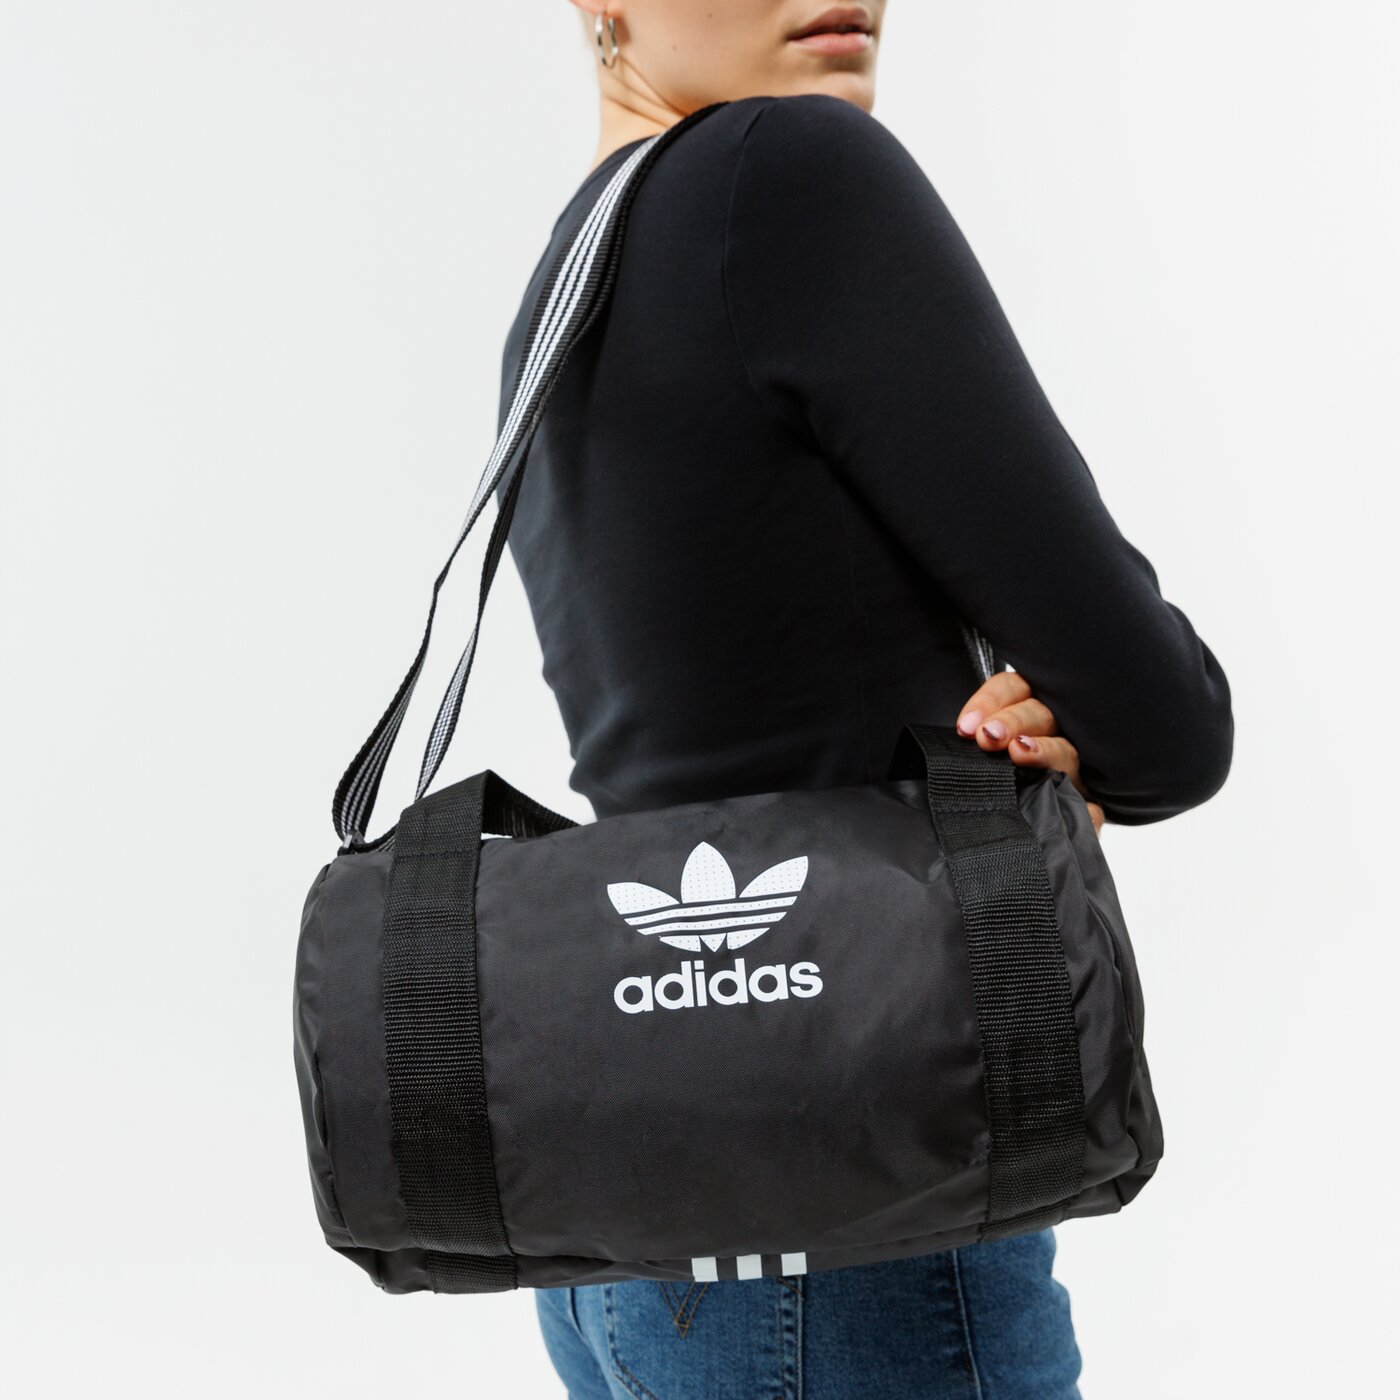 Sieviešu soma ADIDAS SOMA SHOULDER BAG C2 h35566 krāsa melna